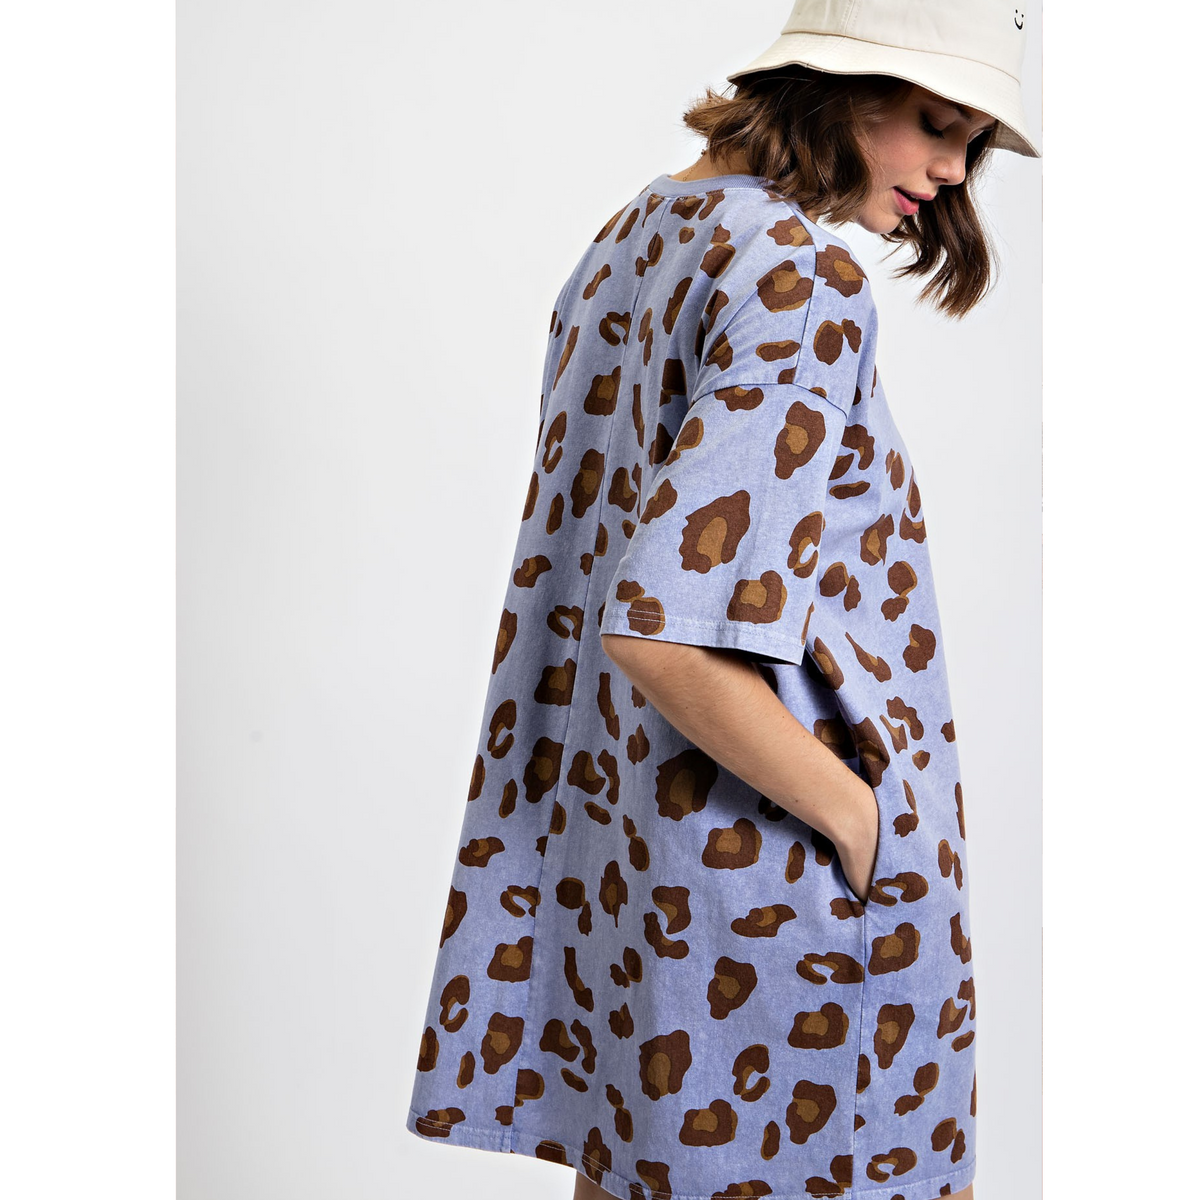 The Leopard Dress *Final Sale*